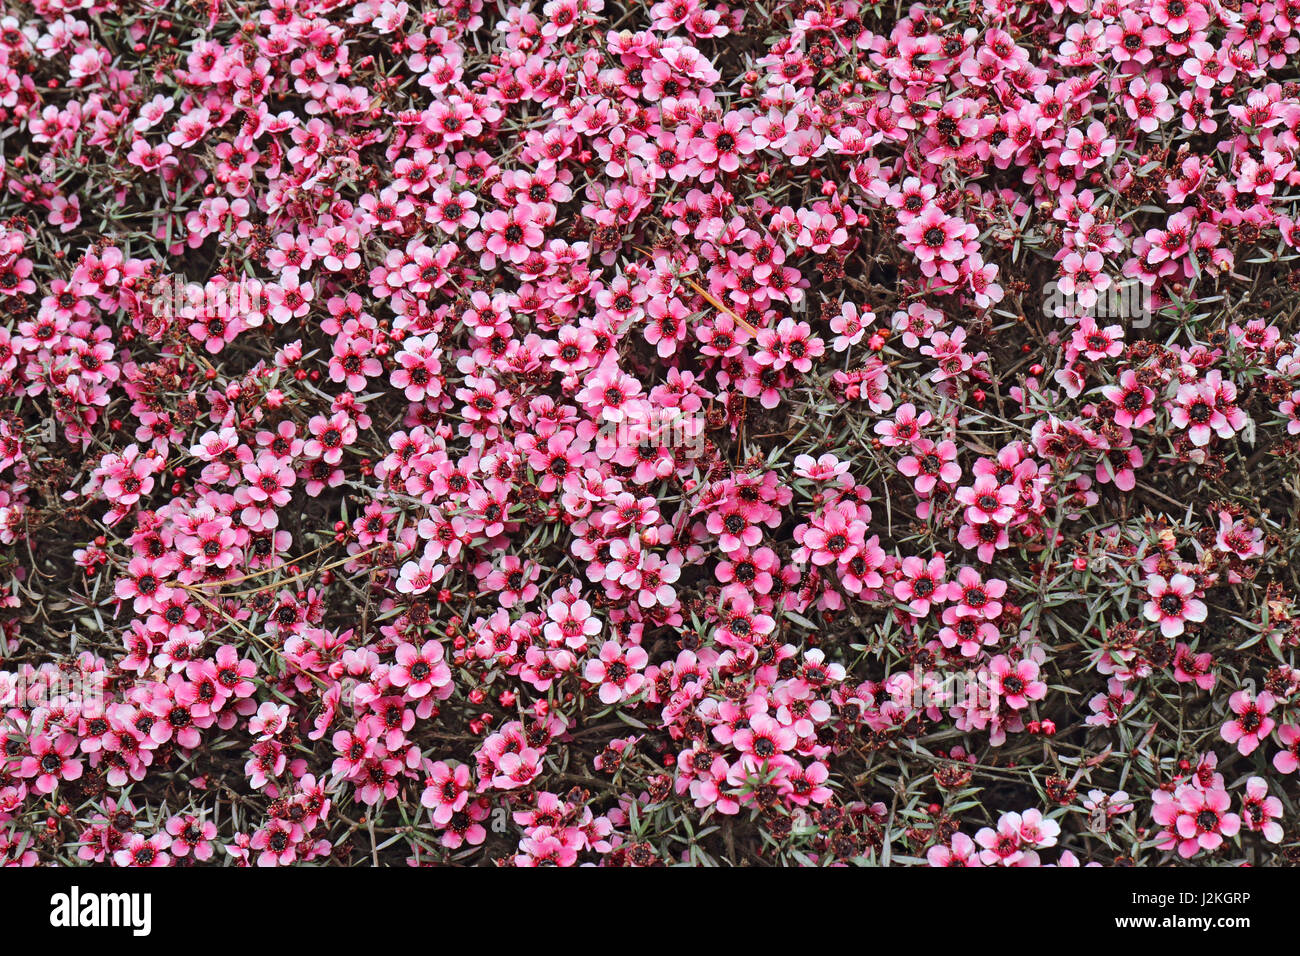 Numerous small, pink flowers of the hybrid Australian tea tree Leptospermum fill the frame Stock Photo